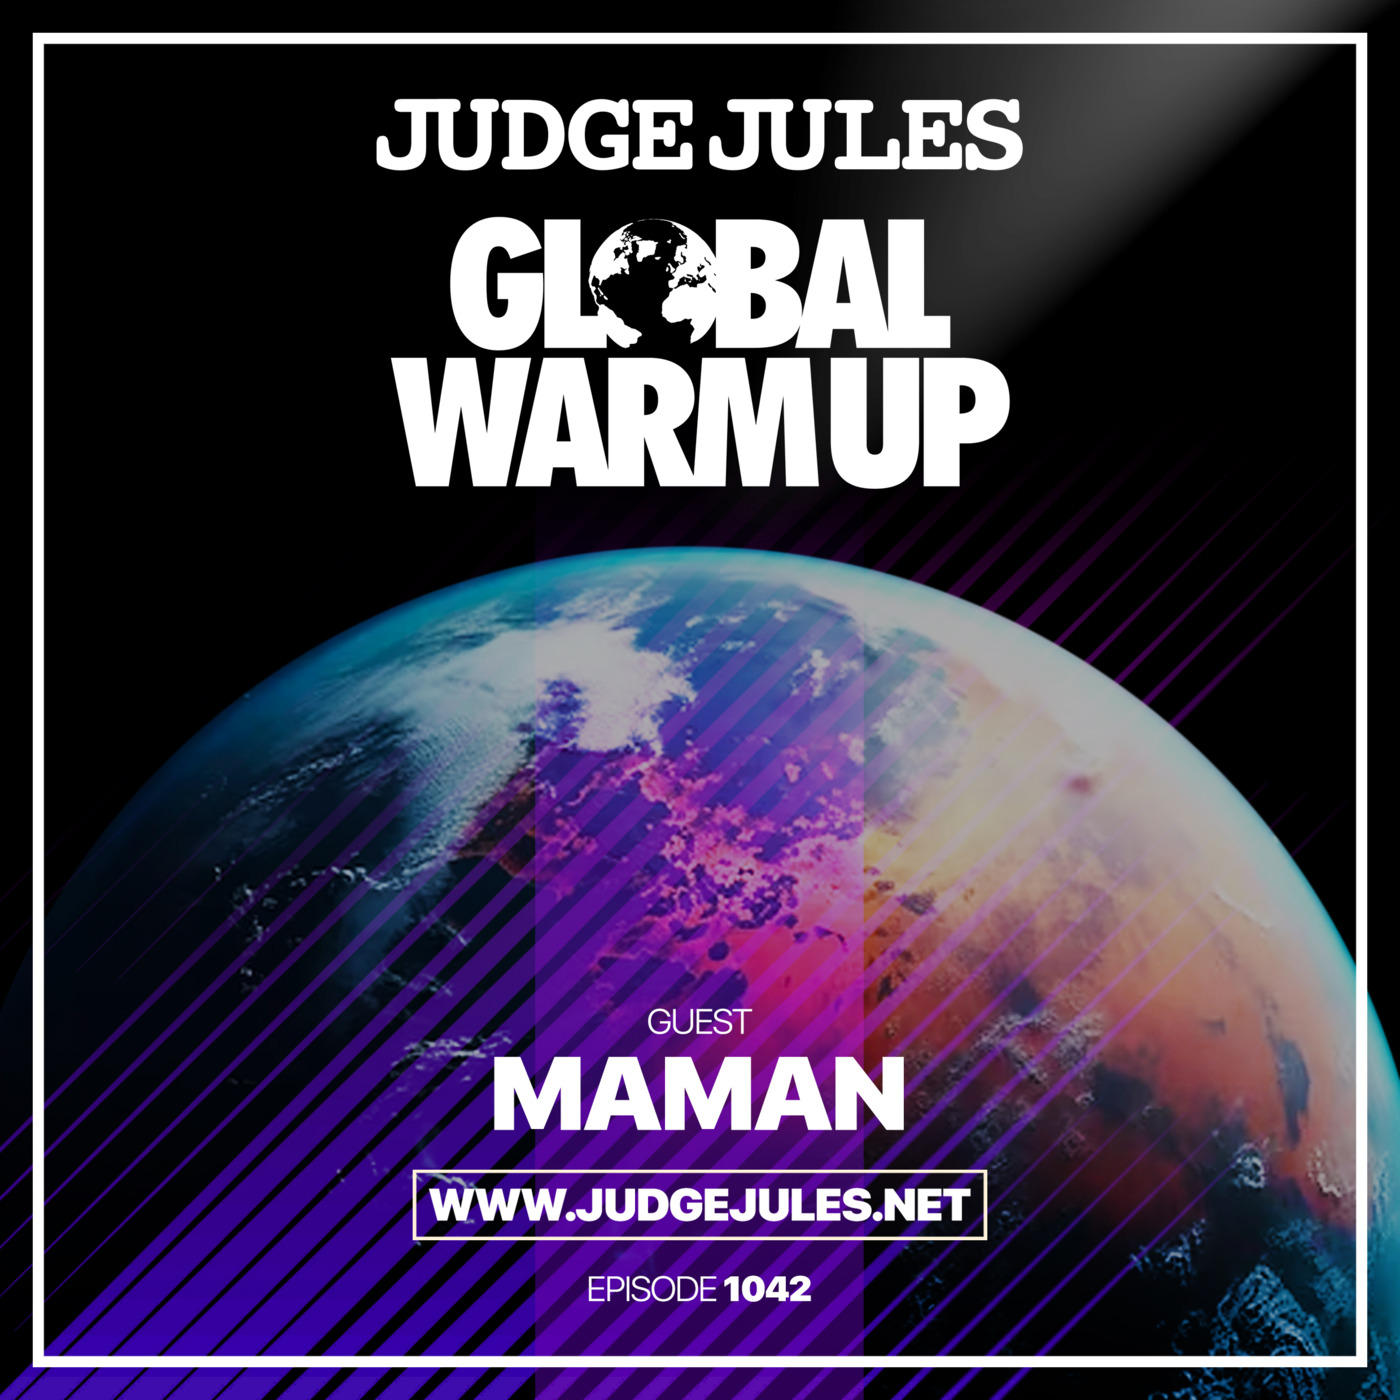 Episode 1042: JUDGE JULES PRESENTS THE GLOBAL WARM UP EPISODE 1042